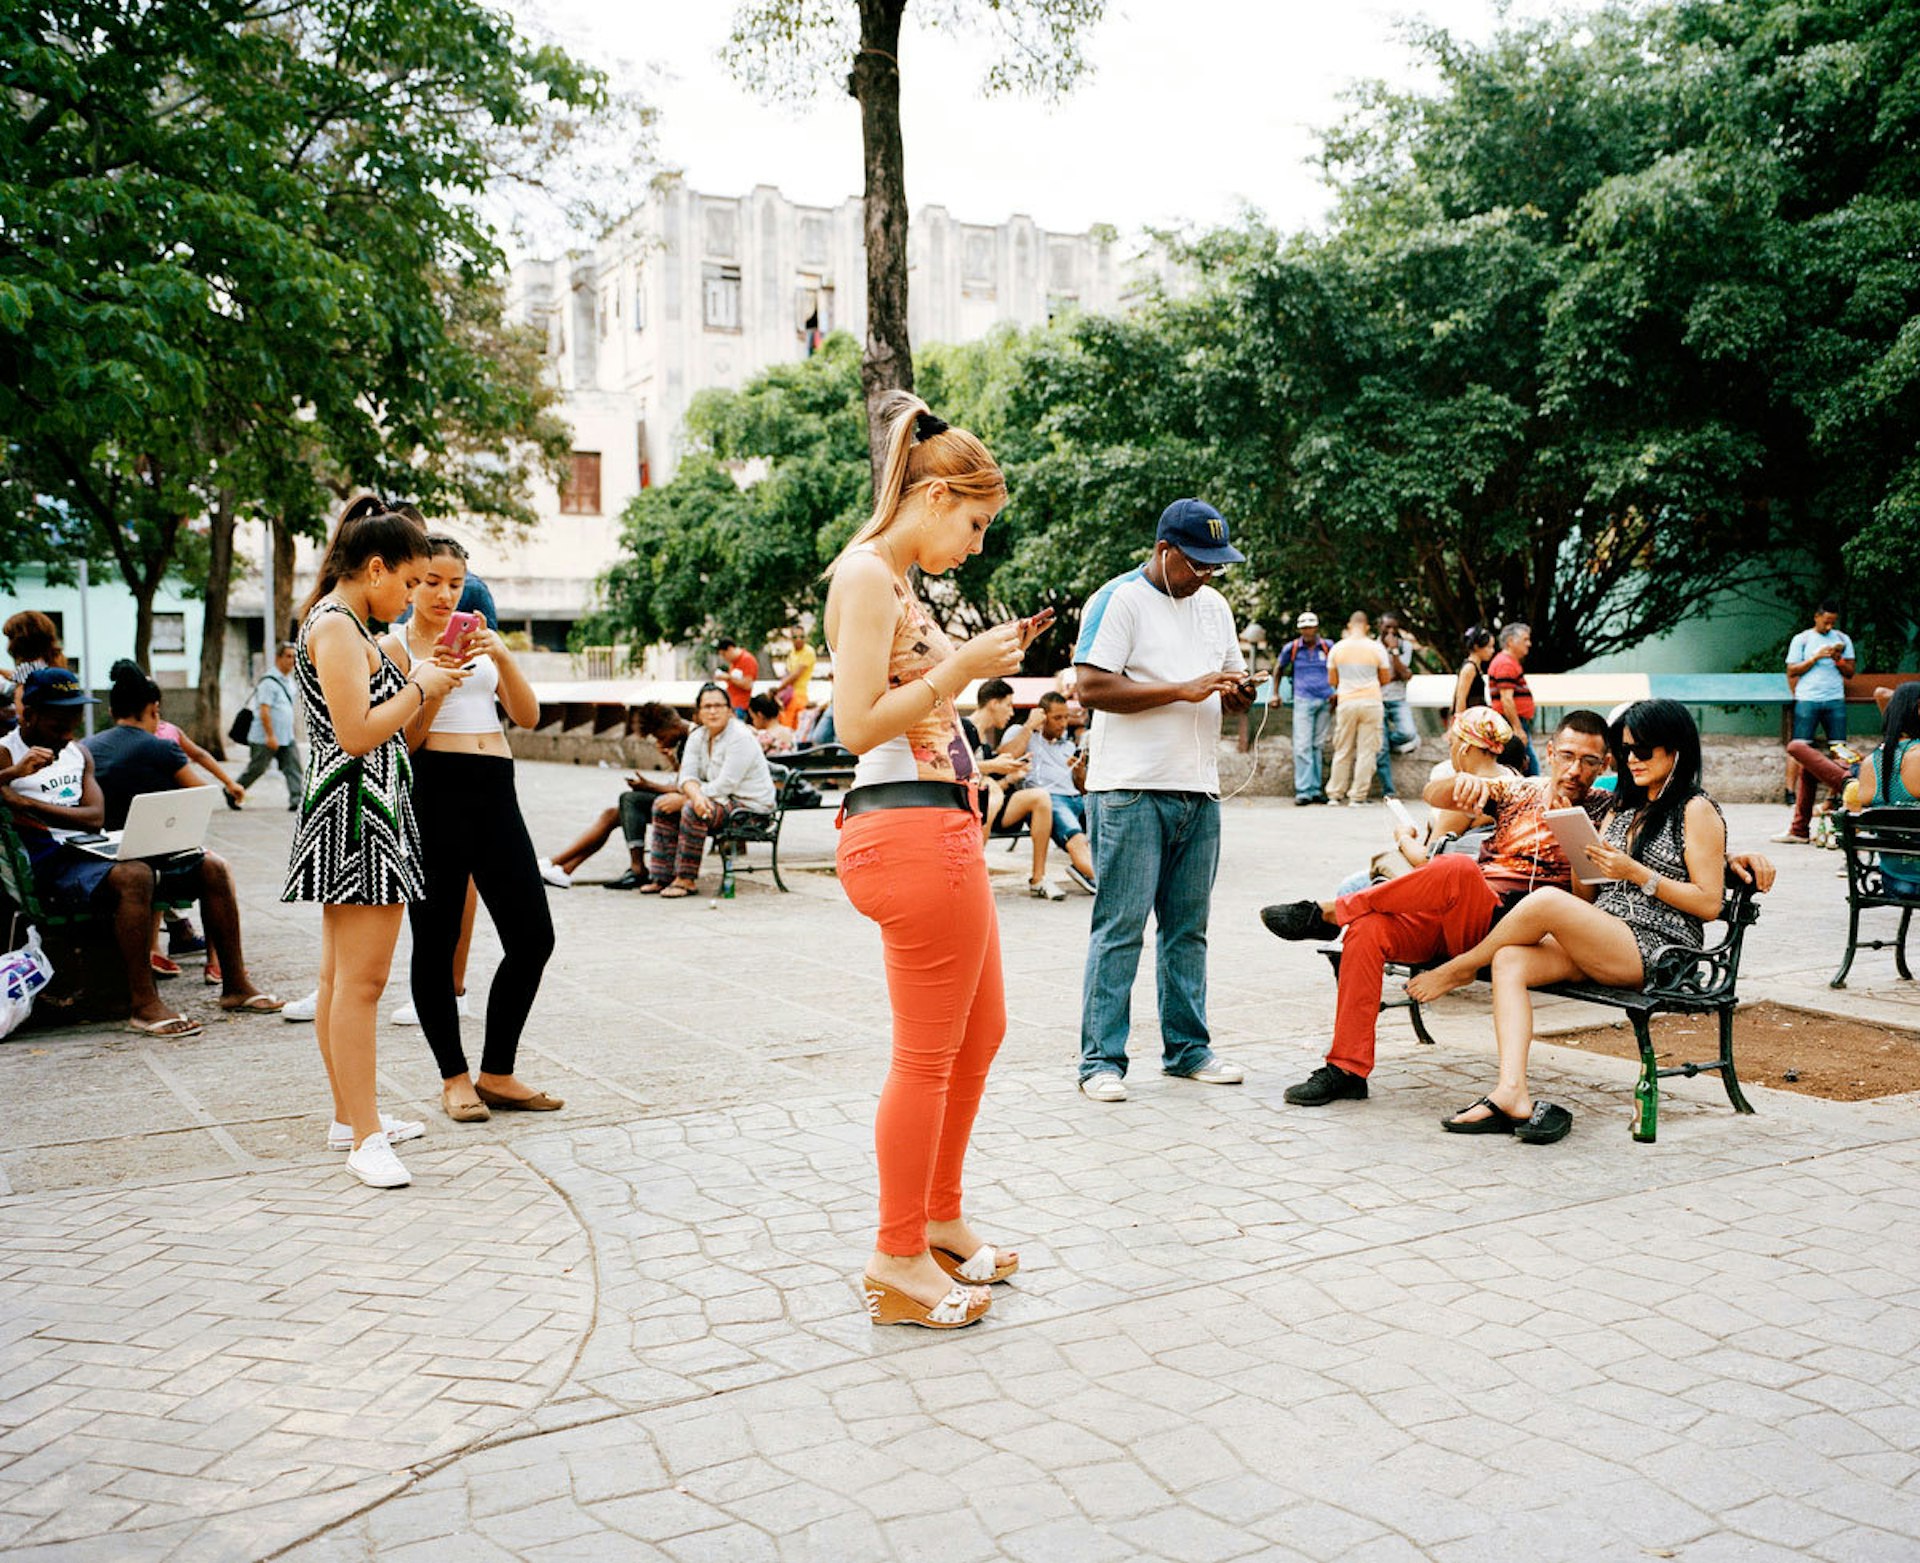 This is what Havana’s growing WiFi revolution looks like